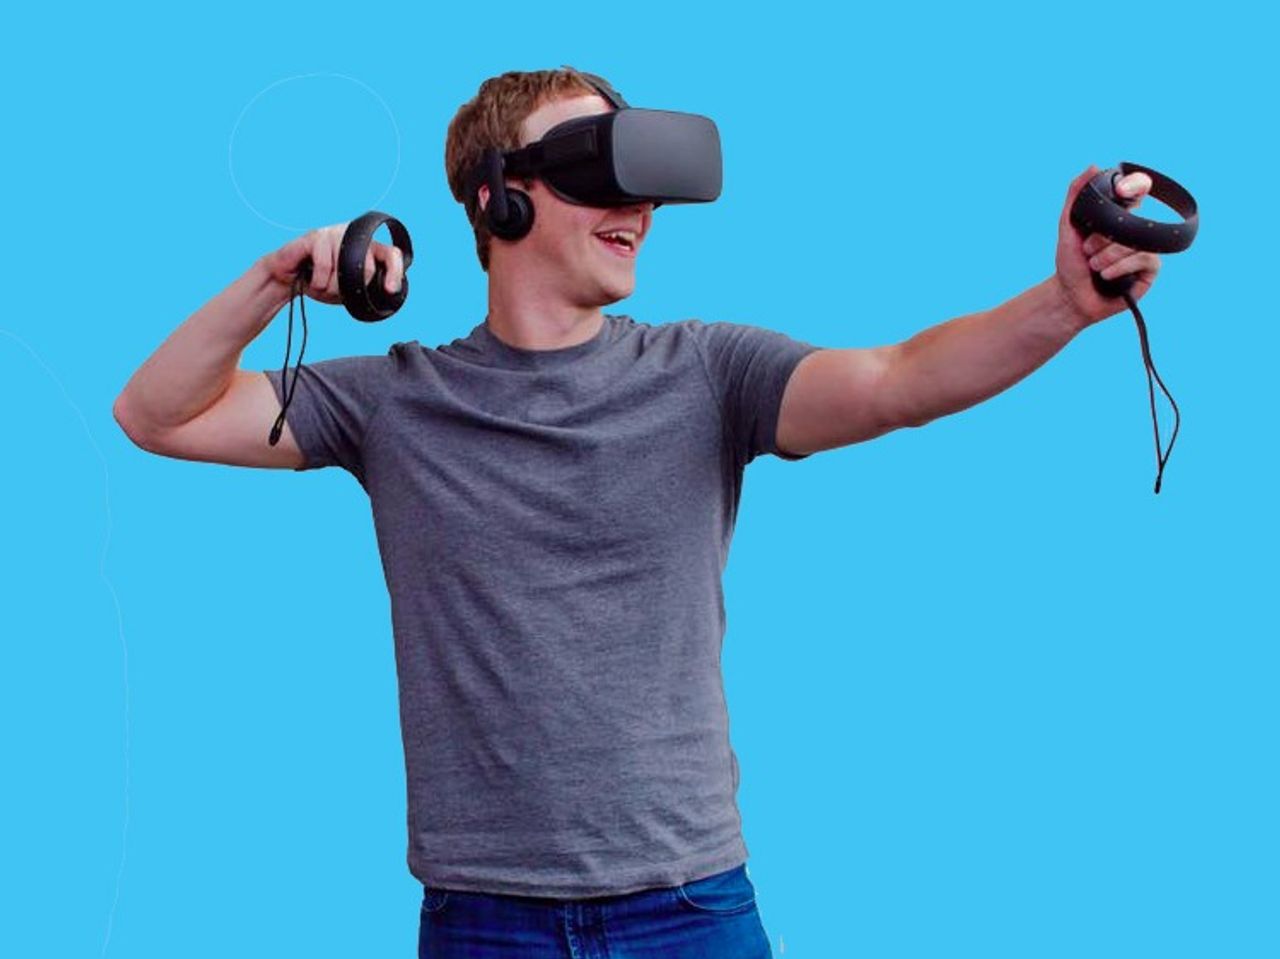  Oculus Riftとタッチコントローラーを身につけるFacebookのCEOマーク・ザッカーバーグ氏